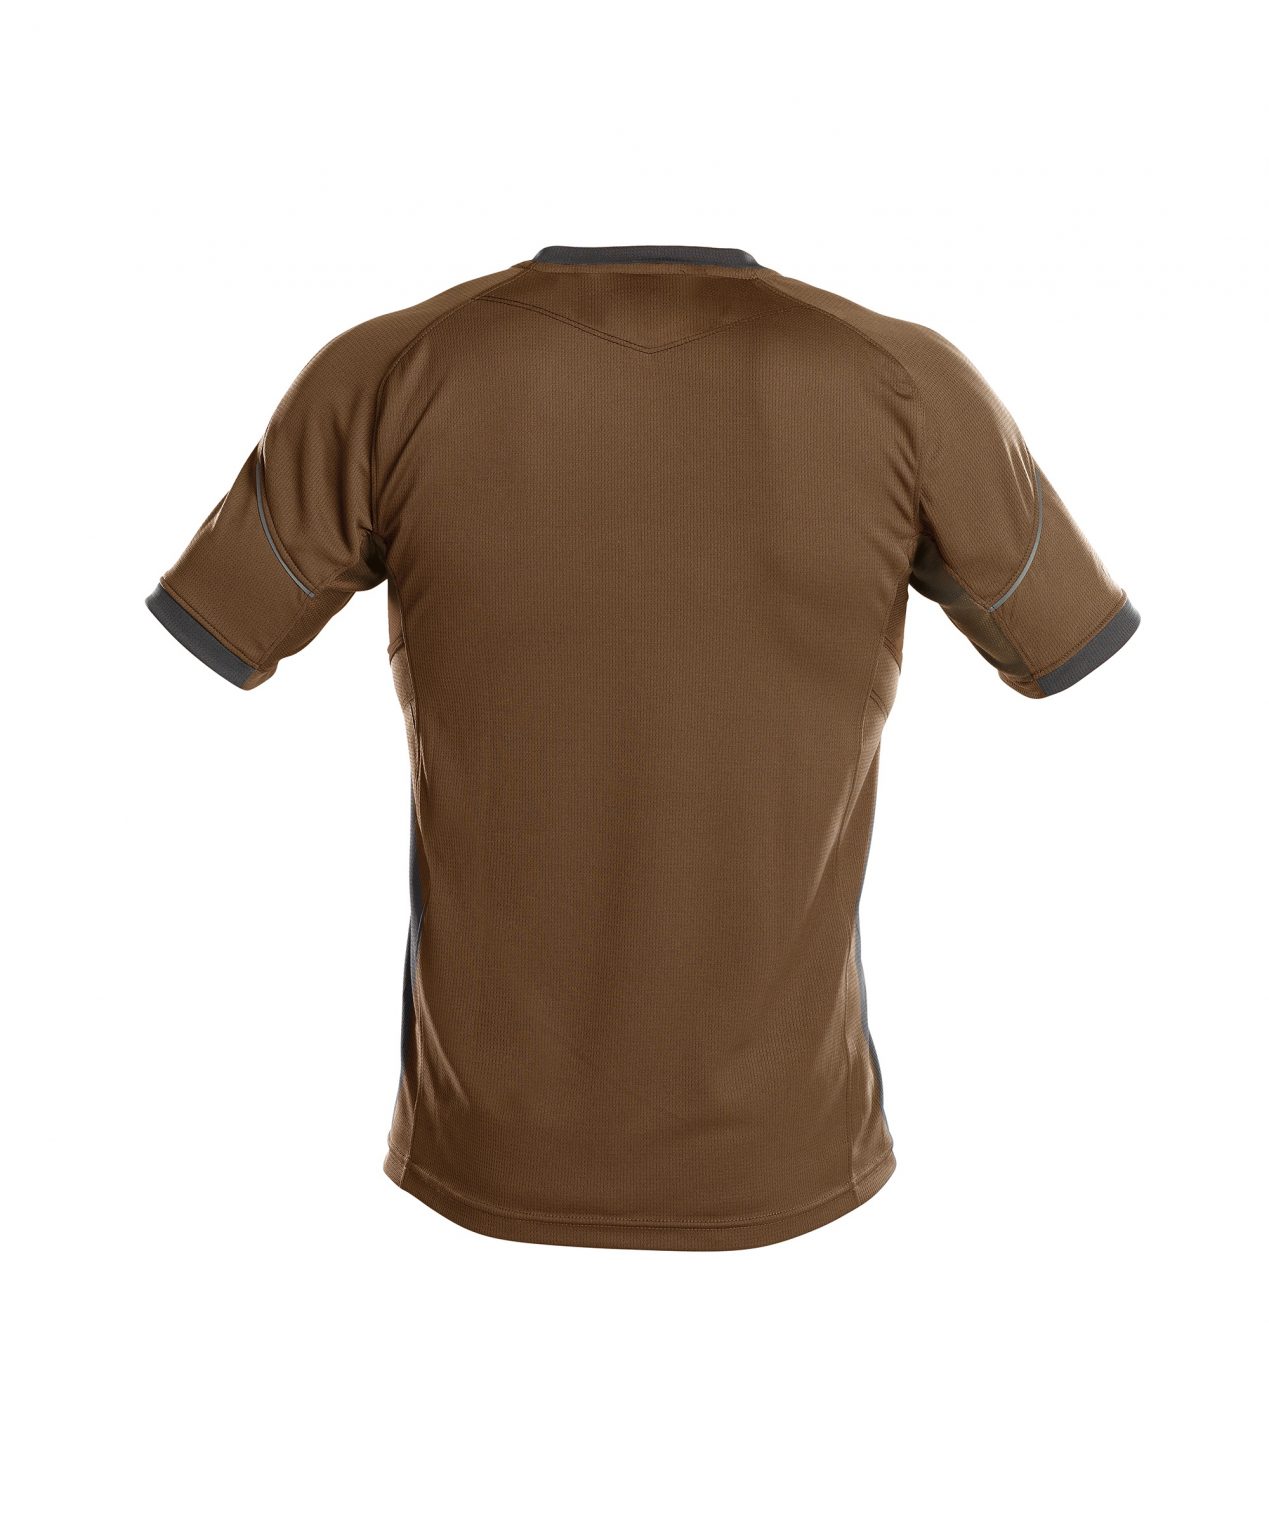 nexus t shirt clay brown anthracite grey back